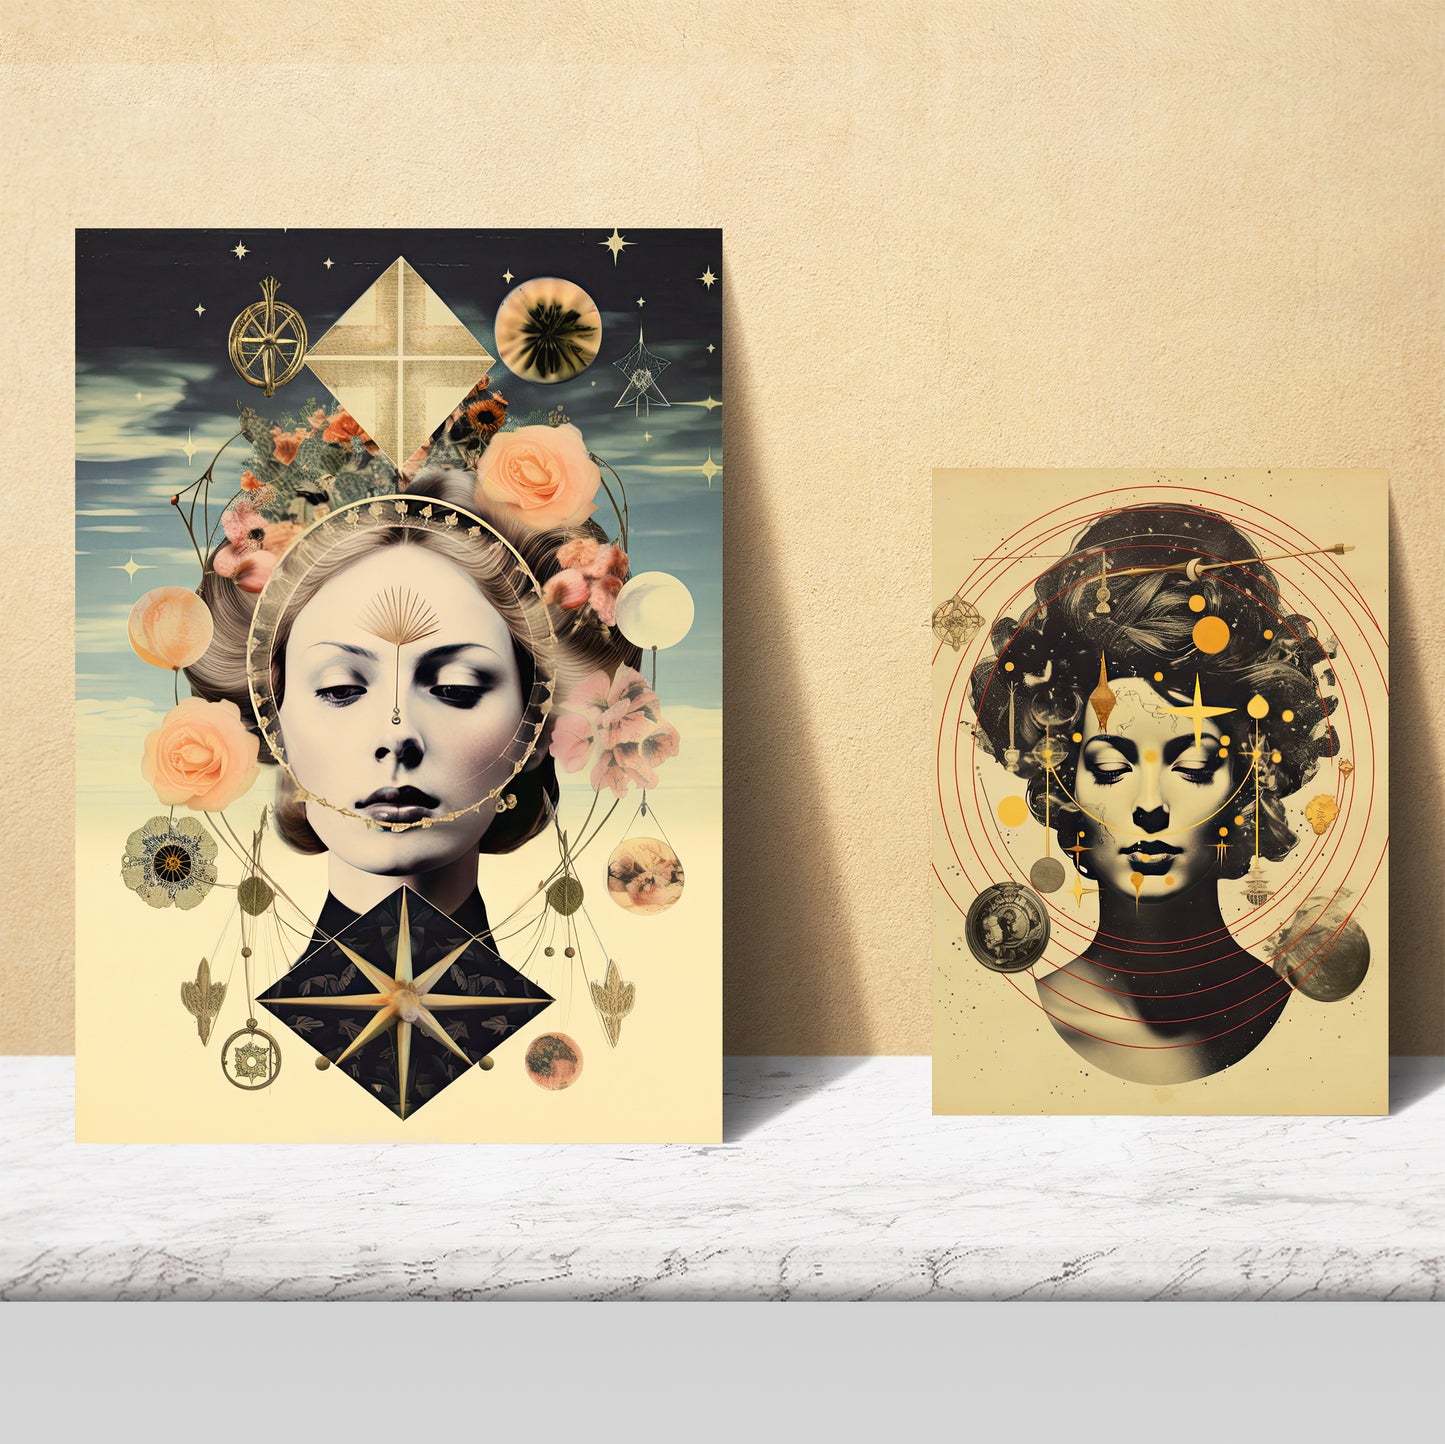 Collage surrealista femenino estilo esoterico mistico